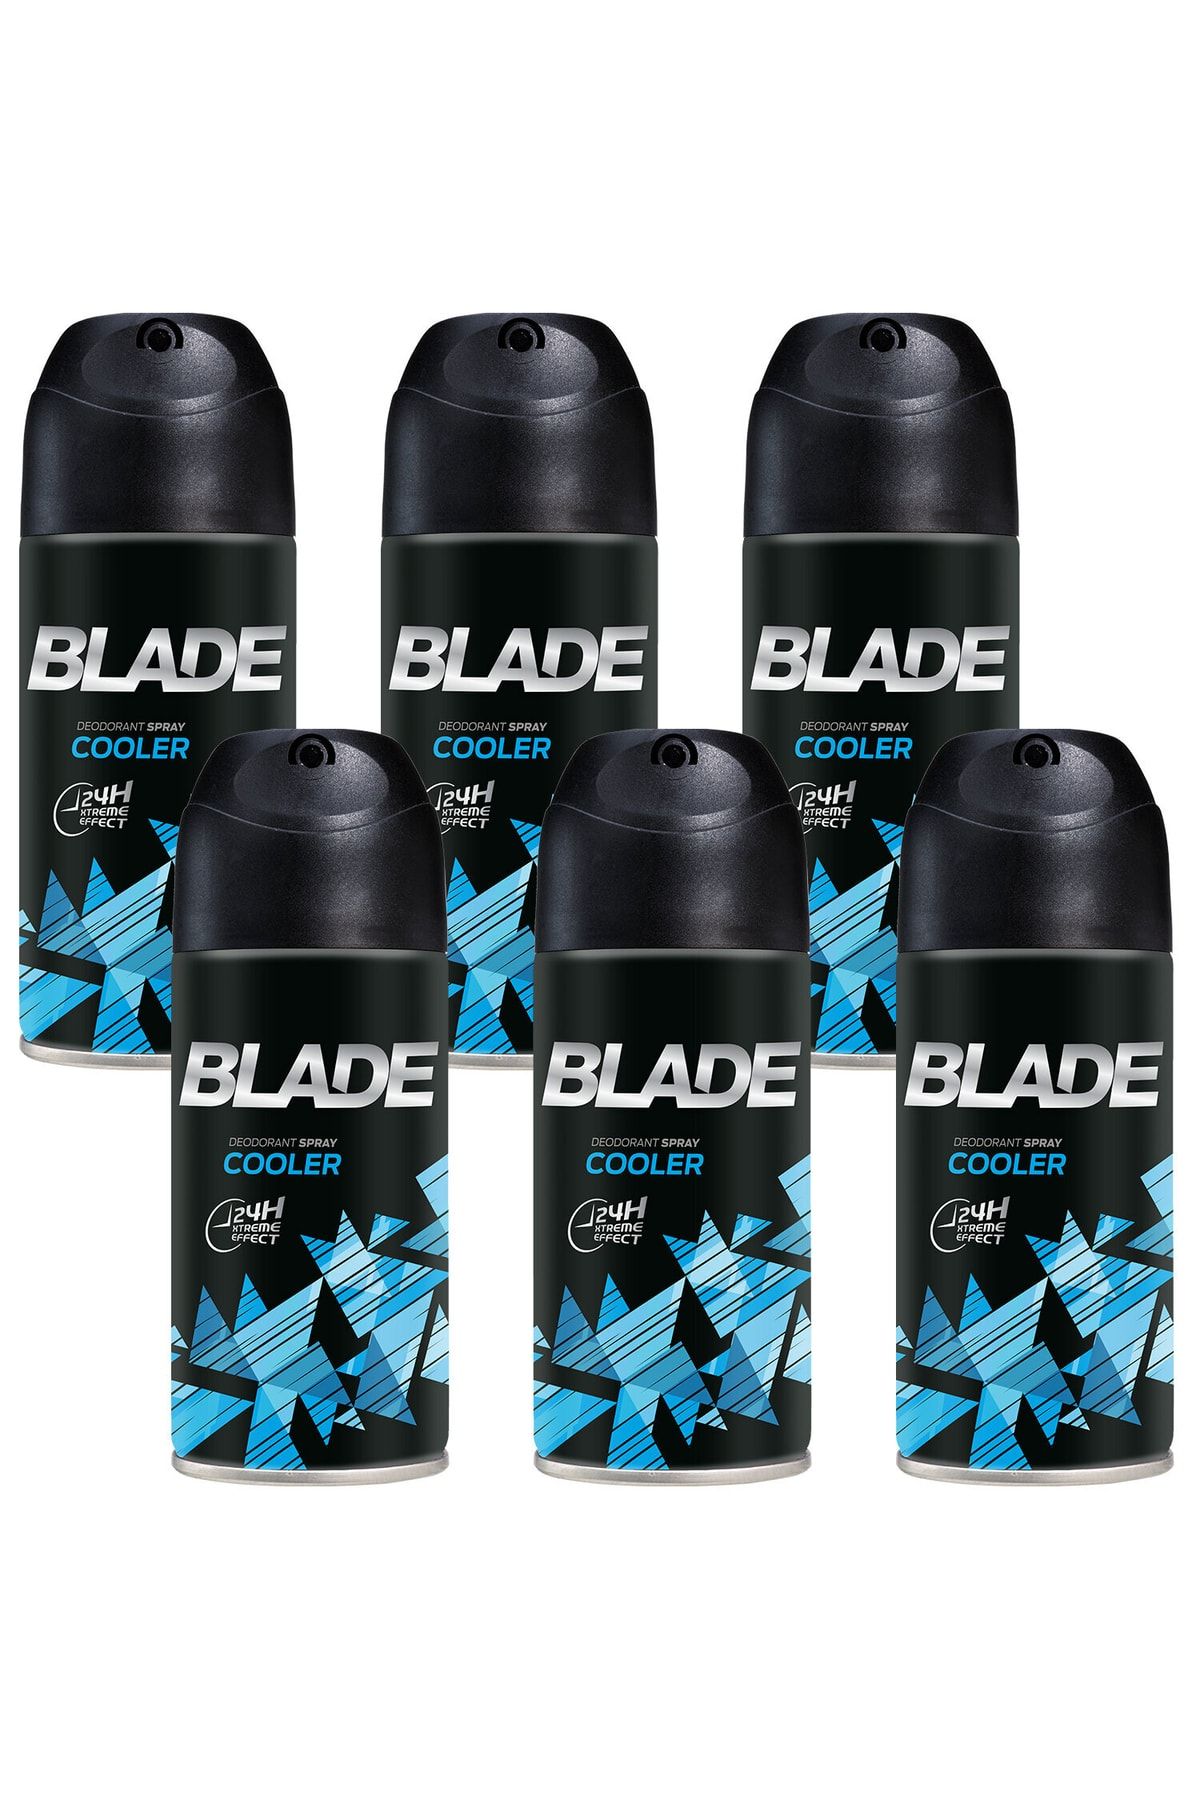 Arko Blade Cooler Erkek Deodorant 6x150ml